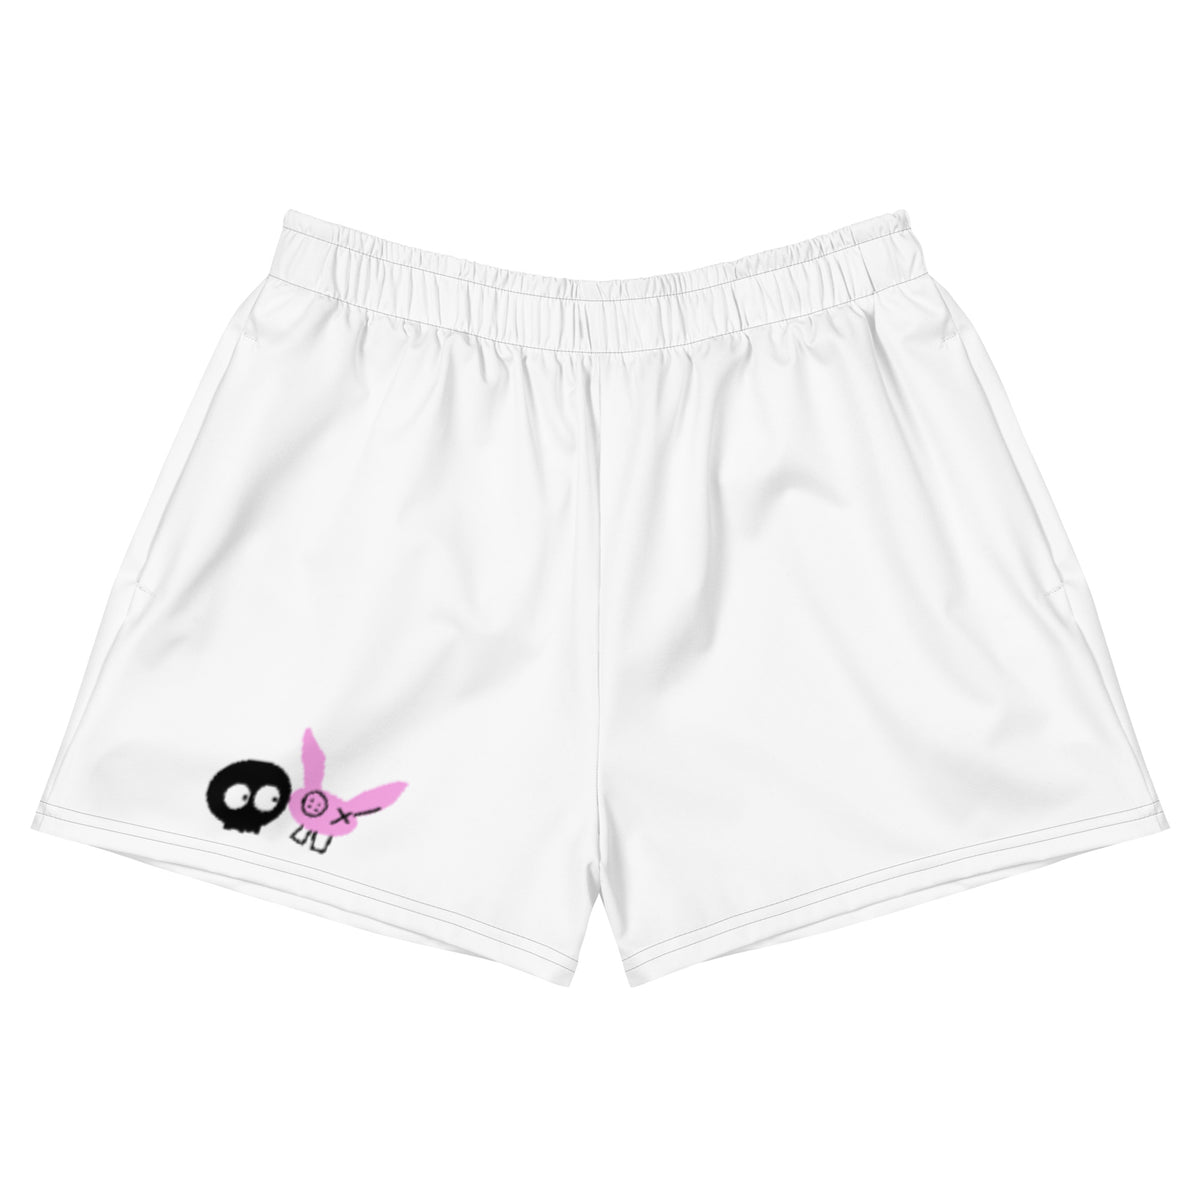 White mm Athletic Shorts